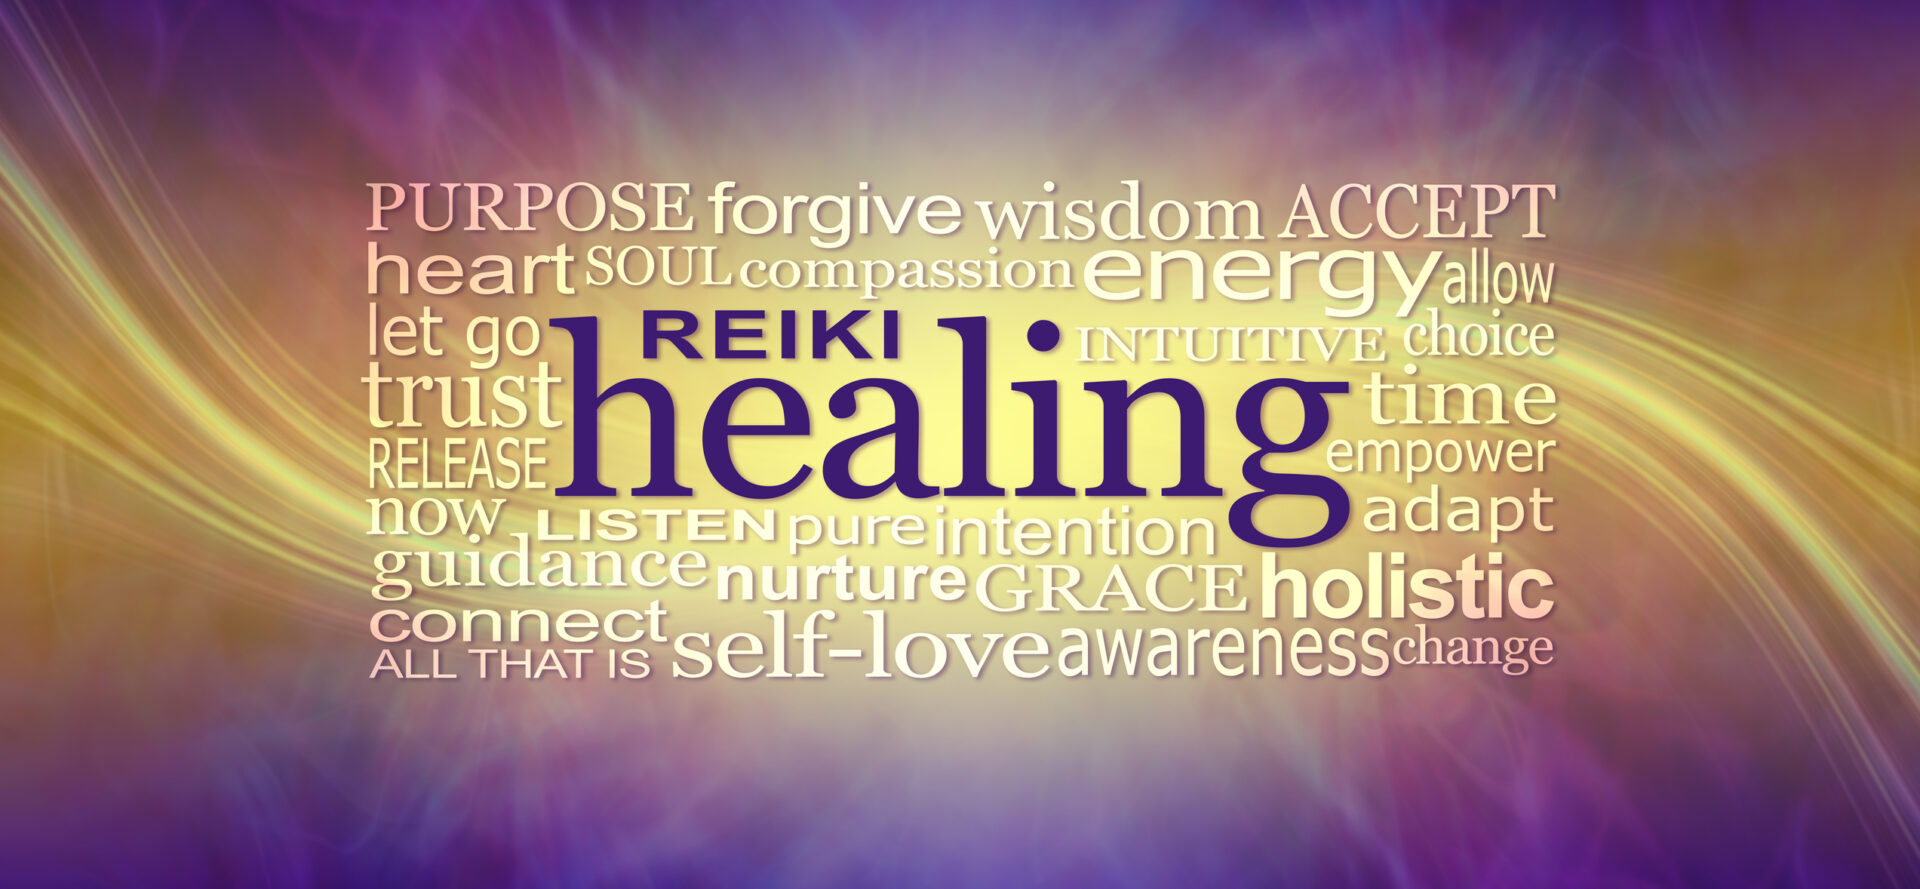 Reiki Healing Word on a Purple Template